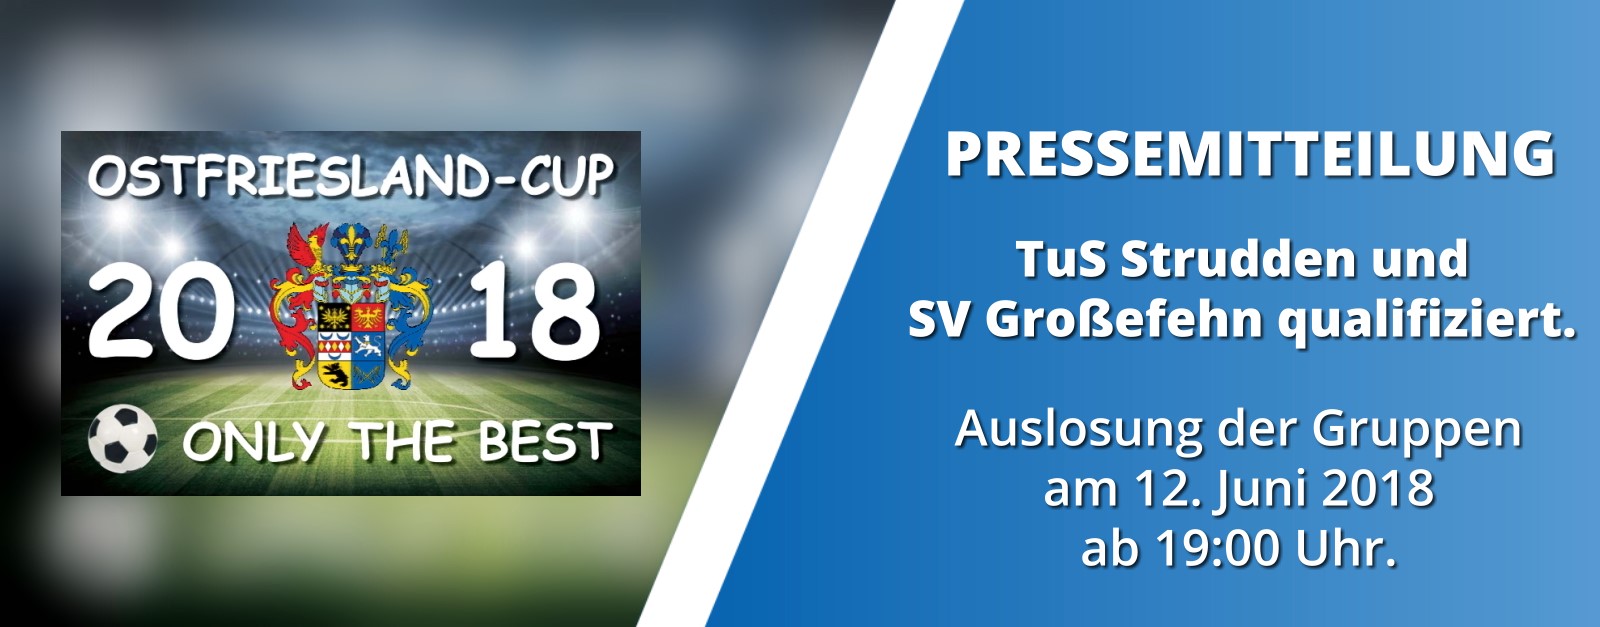 Ostfriesland-CUP 2018 - Pressemitteilung Mai 2018